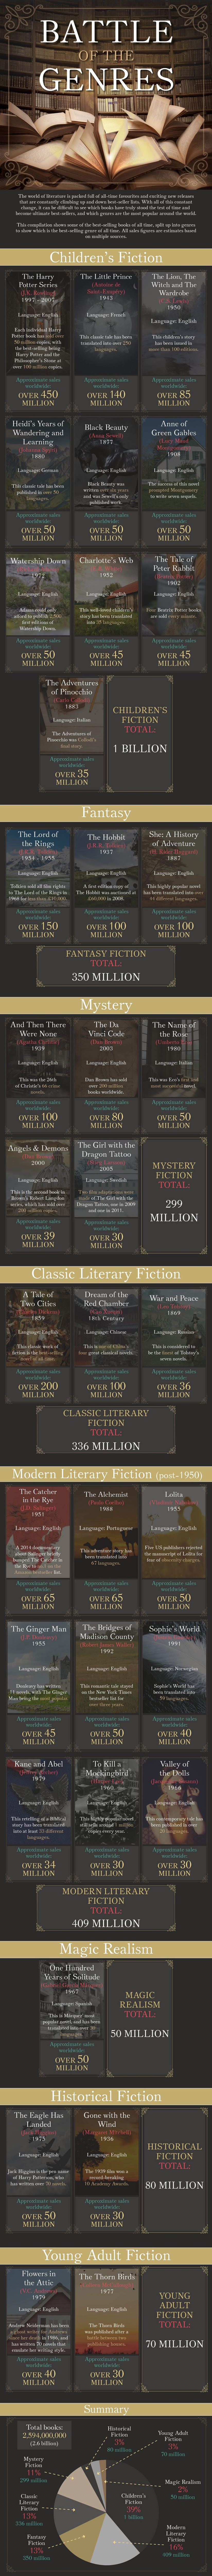 most popular book genres